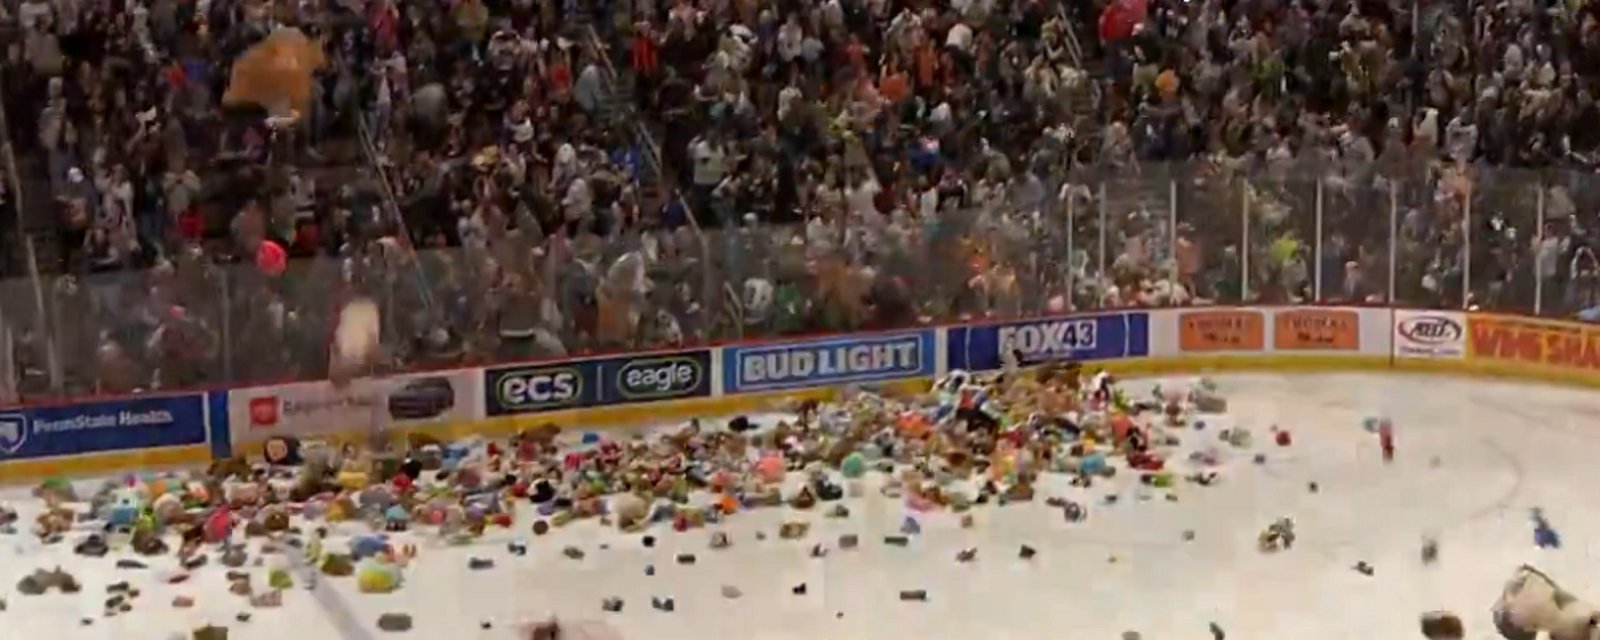 Hockey fans flood the ice in record-setting Teddy Bear Toss.